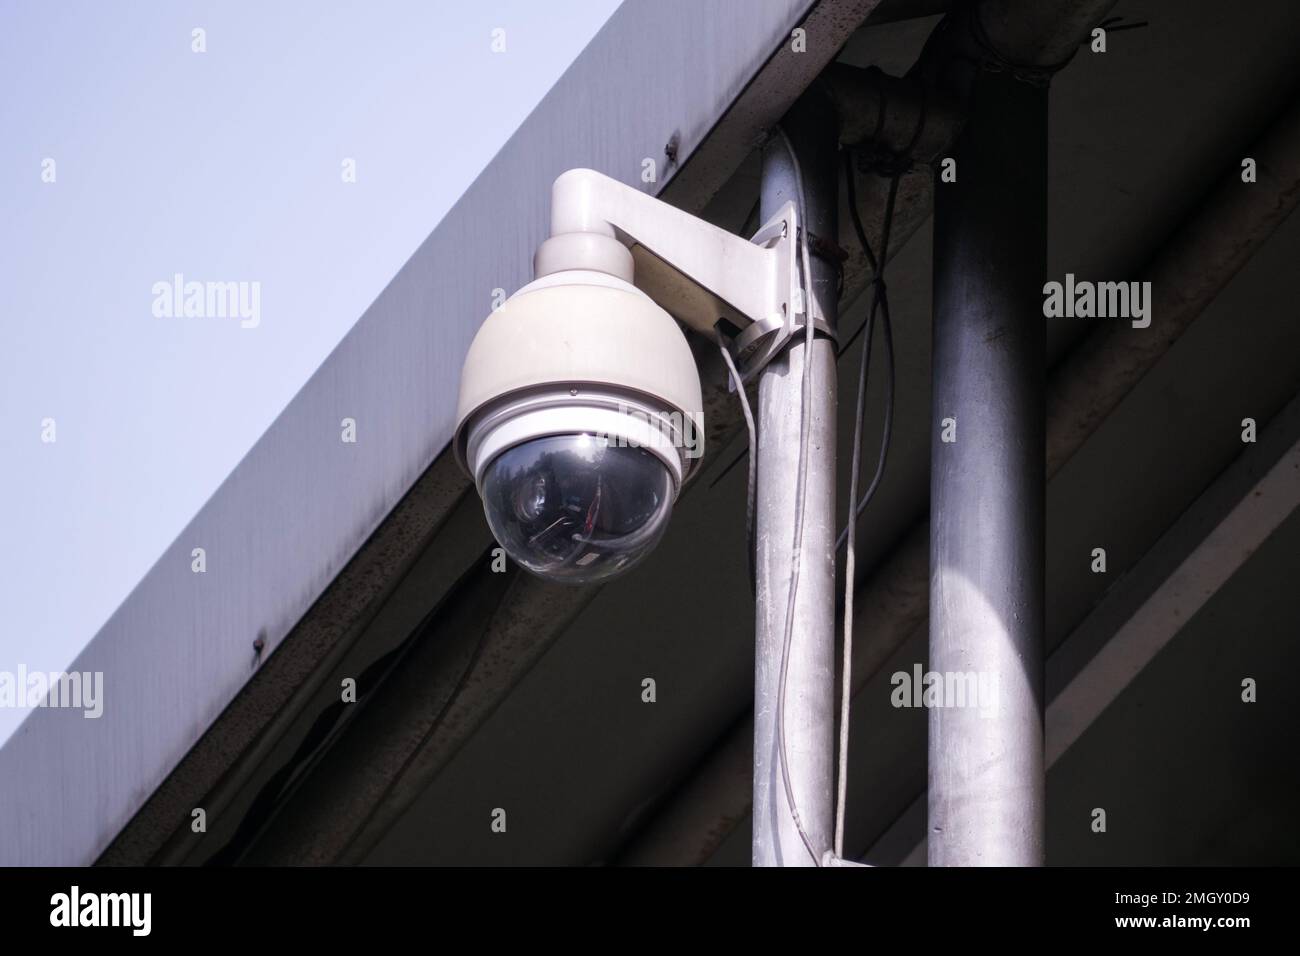 CCTV to monitor traffic violations Stock Photo